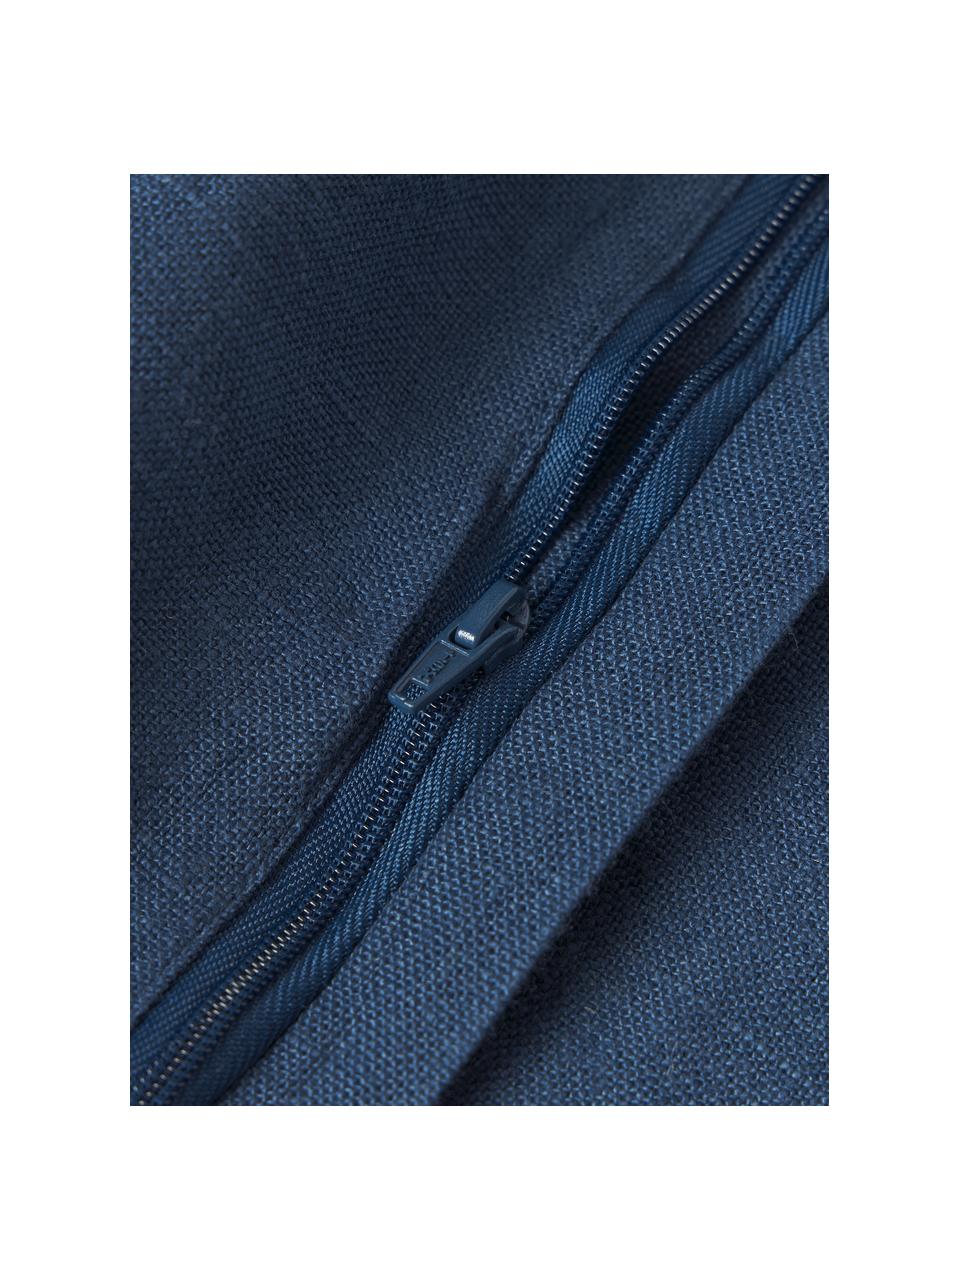 Housse de coussin lin bleu marine Lanya, 100 % pur lin, Bleu marine, larg. 30 x long. 50 cm